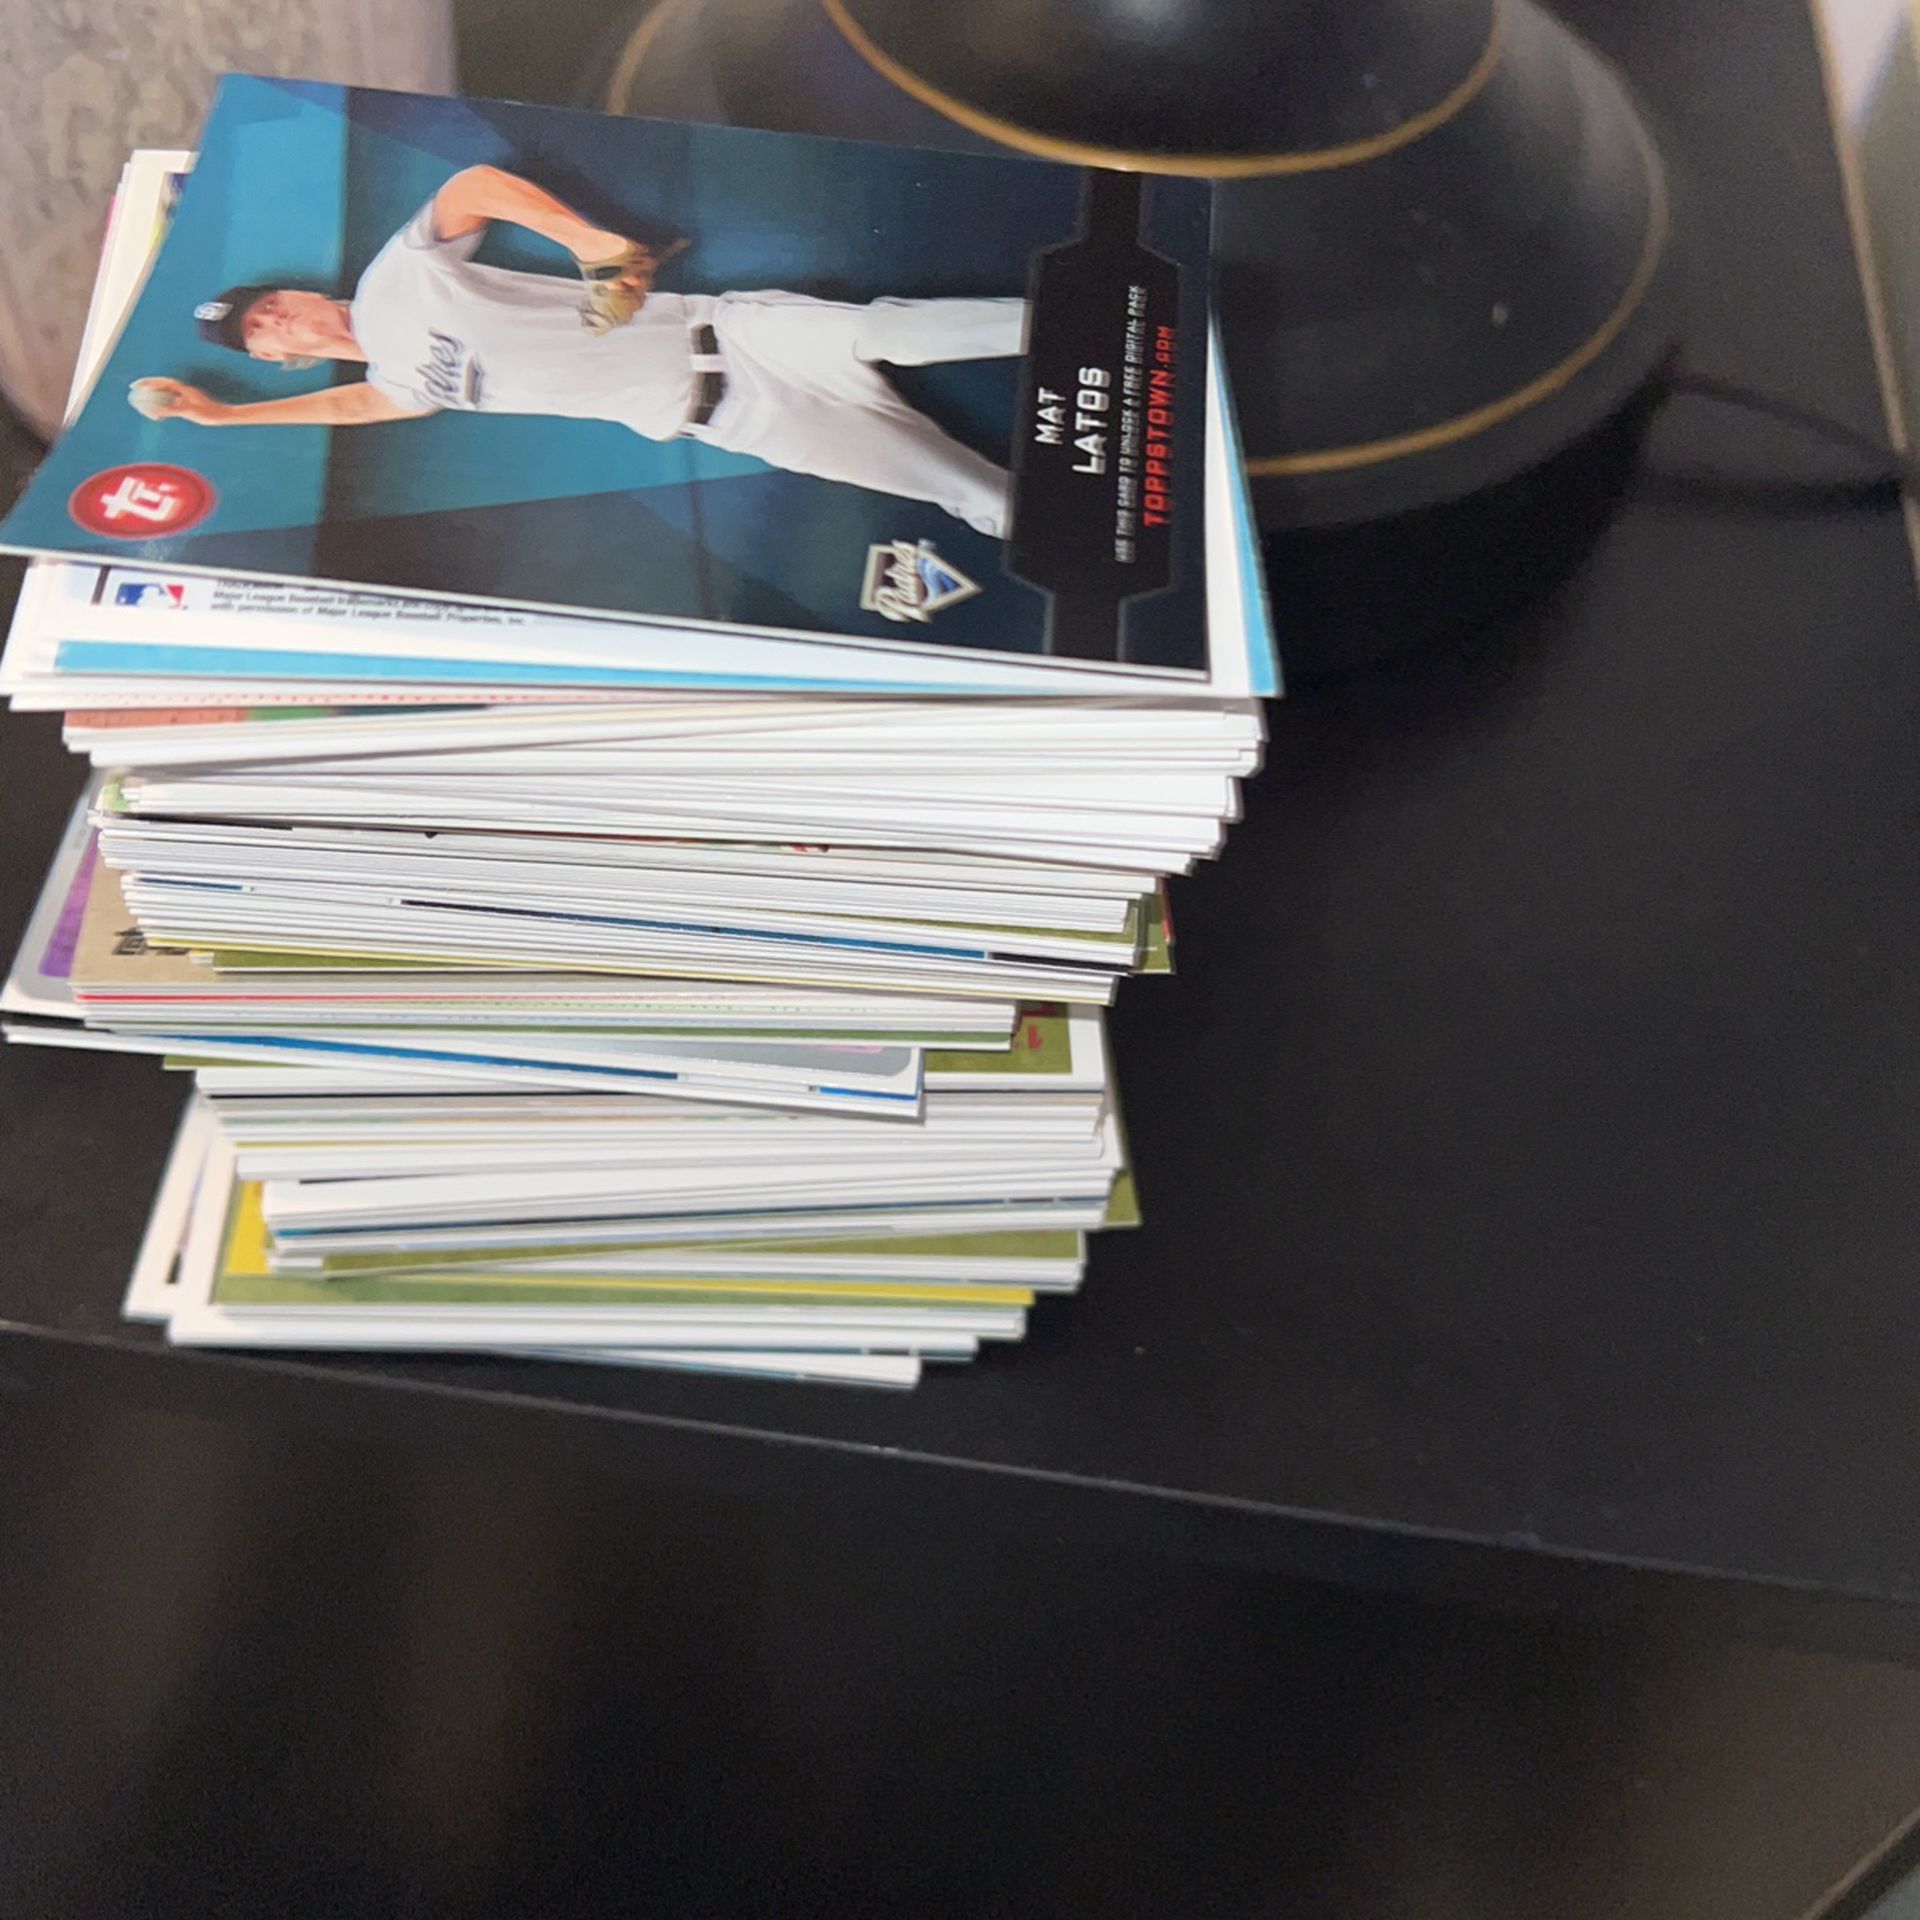 baseball cards 